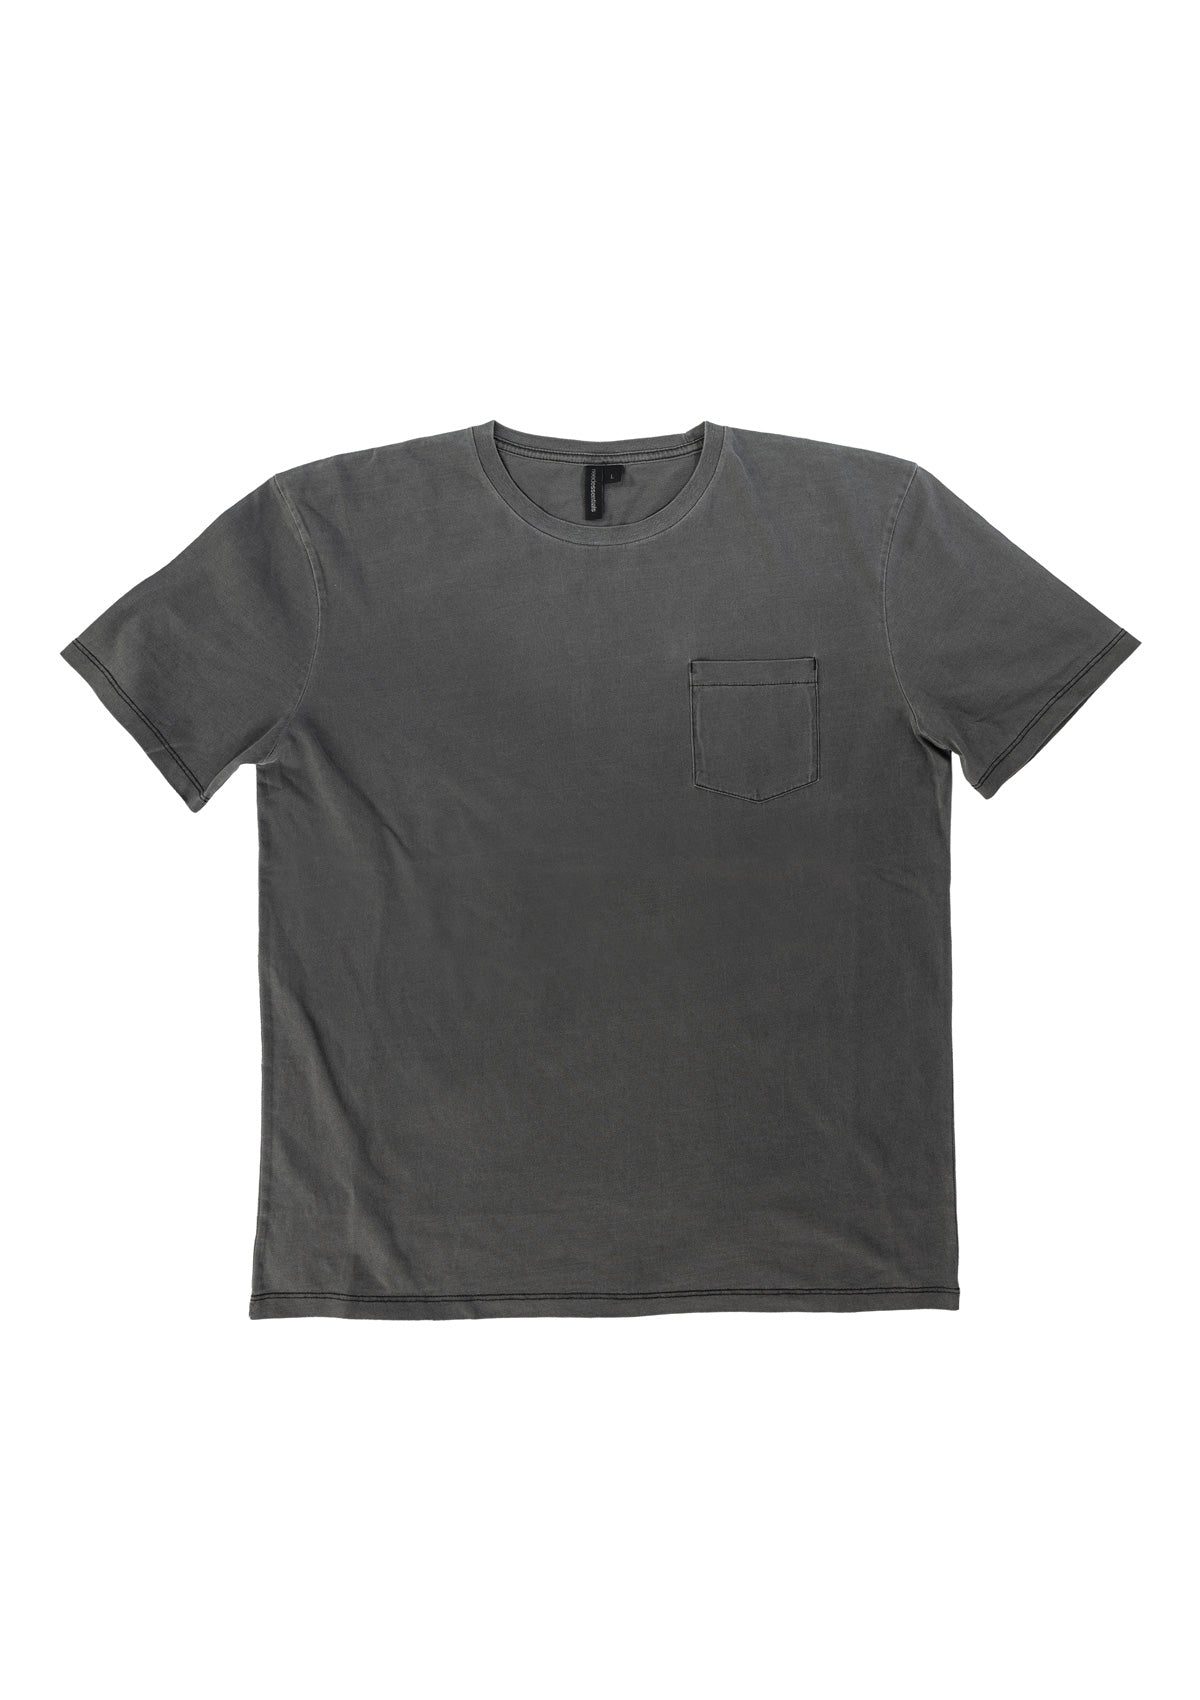 Organic Cotton Pocket T-shirt - Charcoal